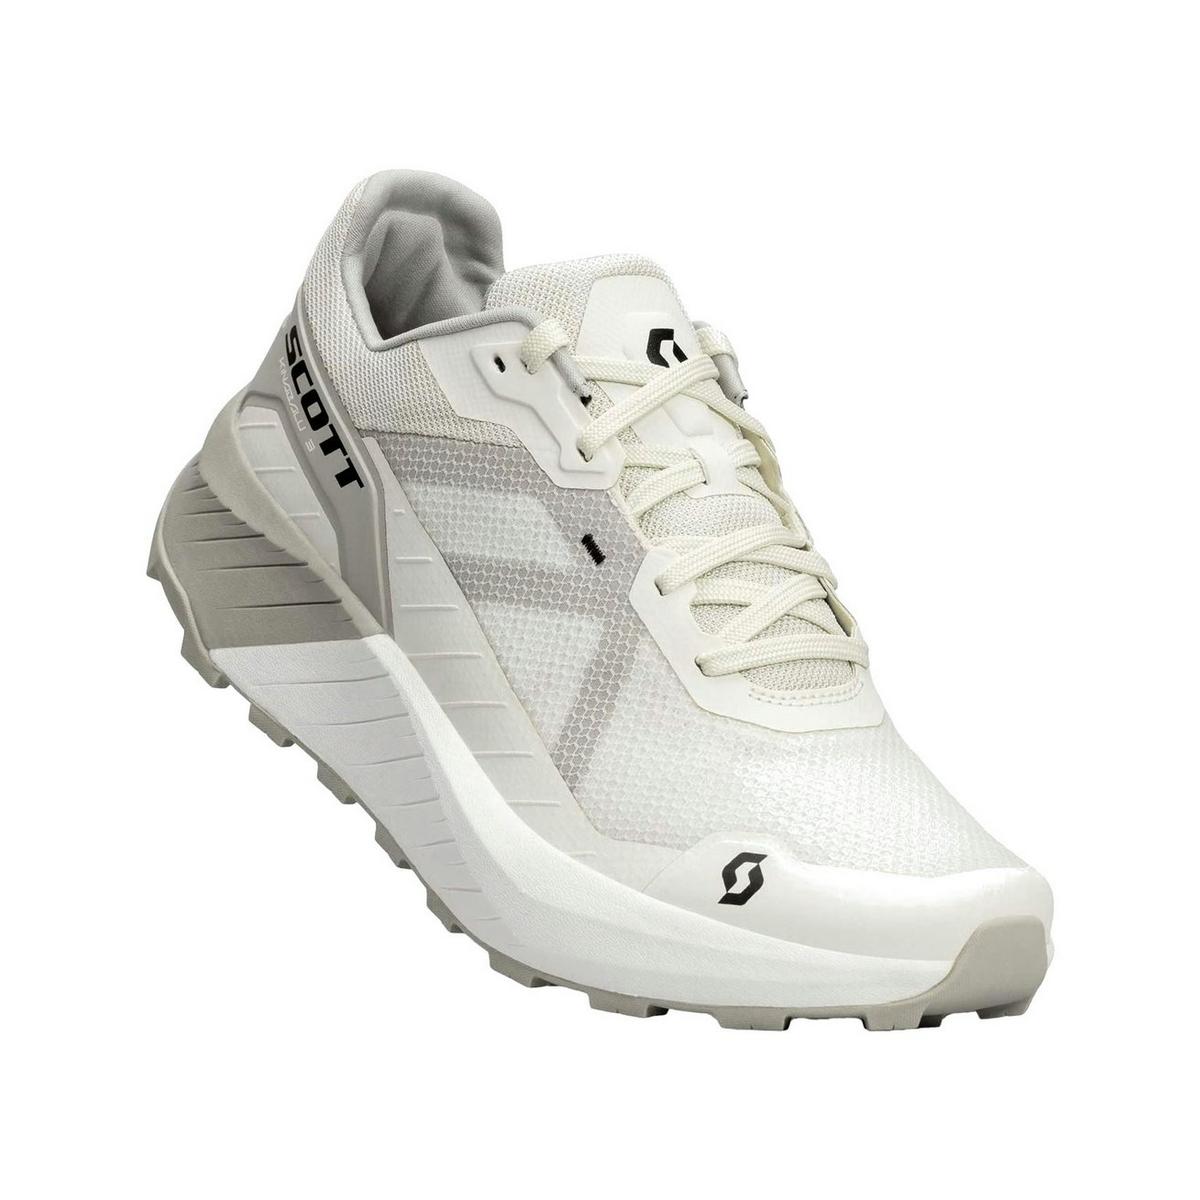 Scott Men's Kinibalu 3 Trail Running Shoes - White